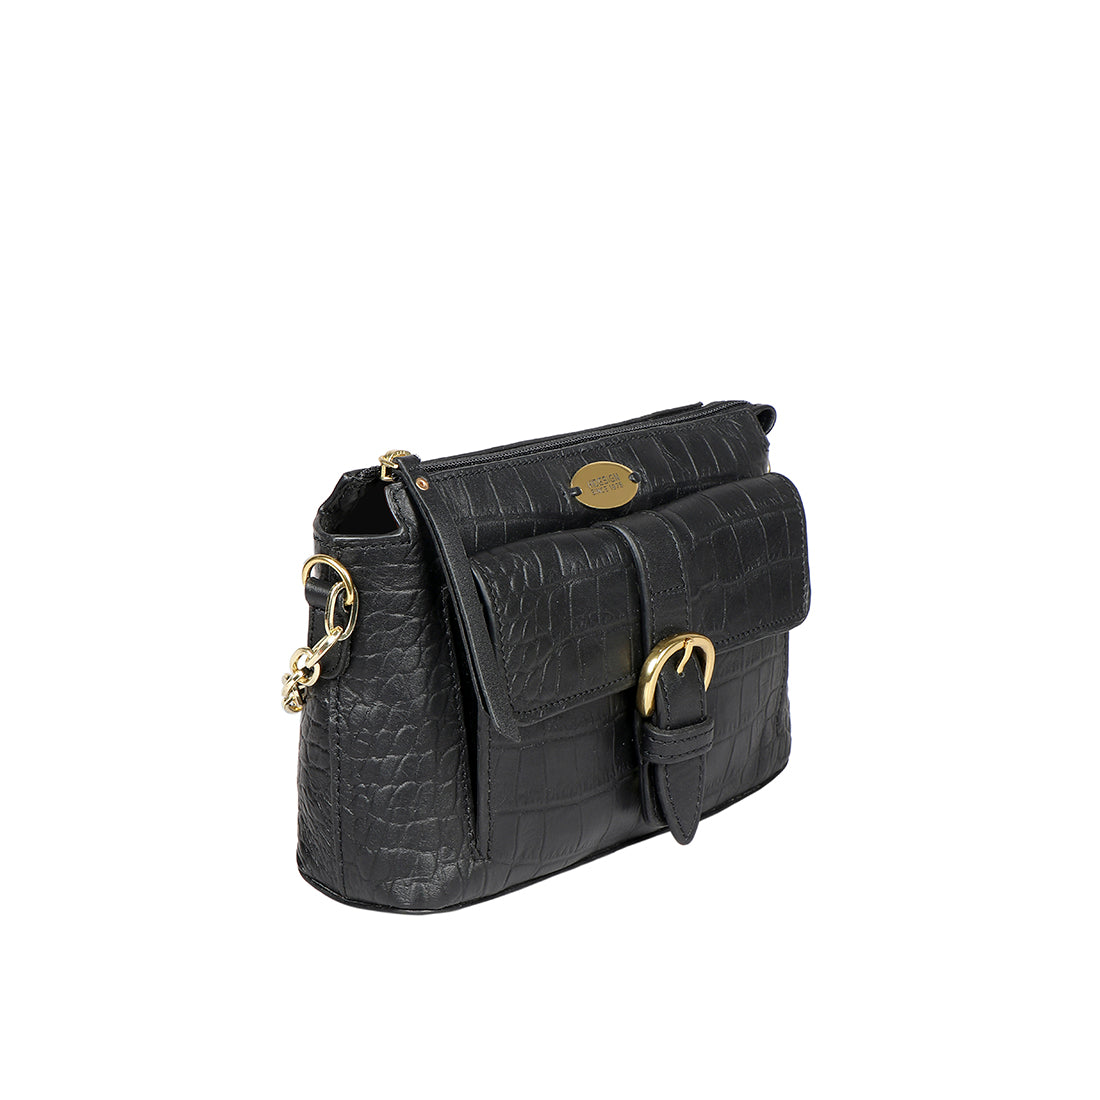 Buy Black Infinite 03 Sling Bag Online - Hidesign